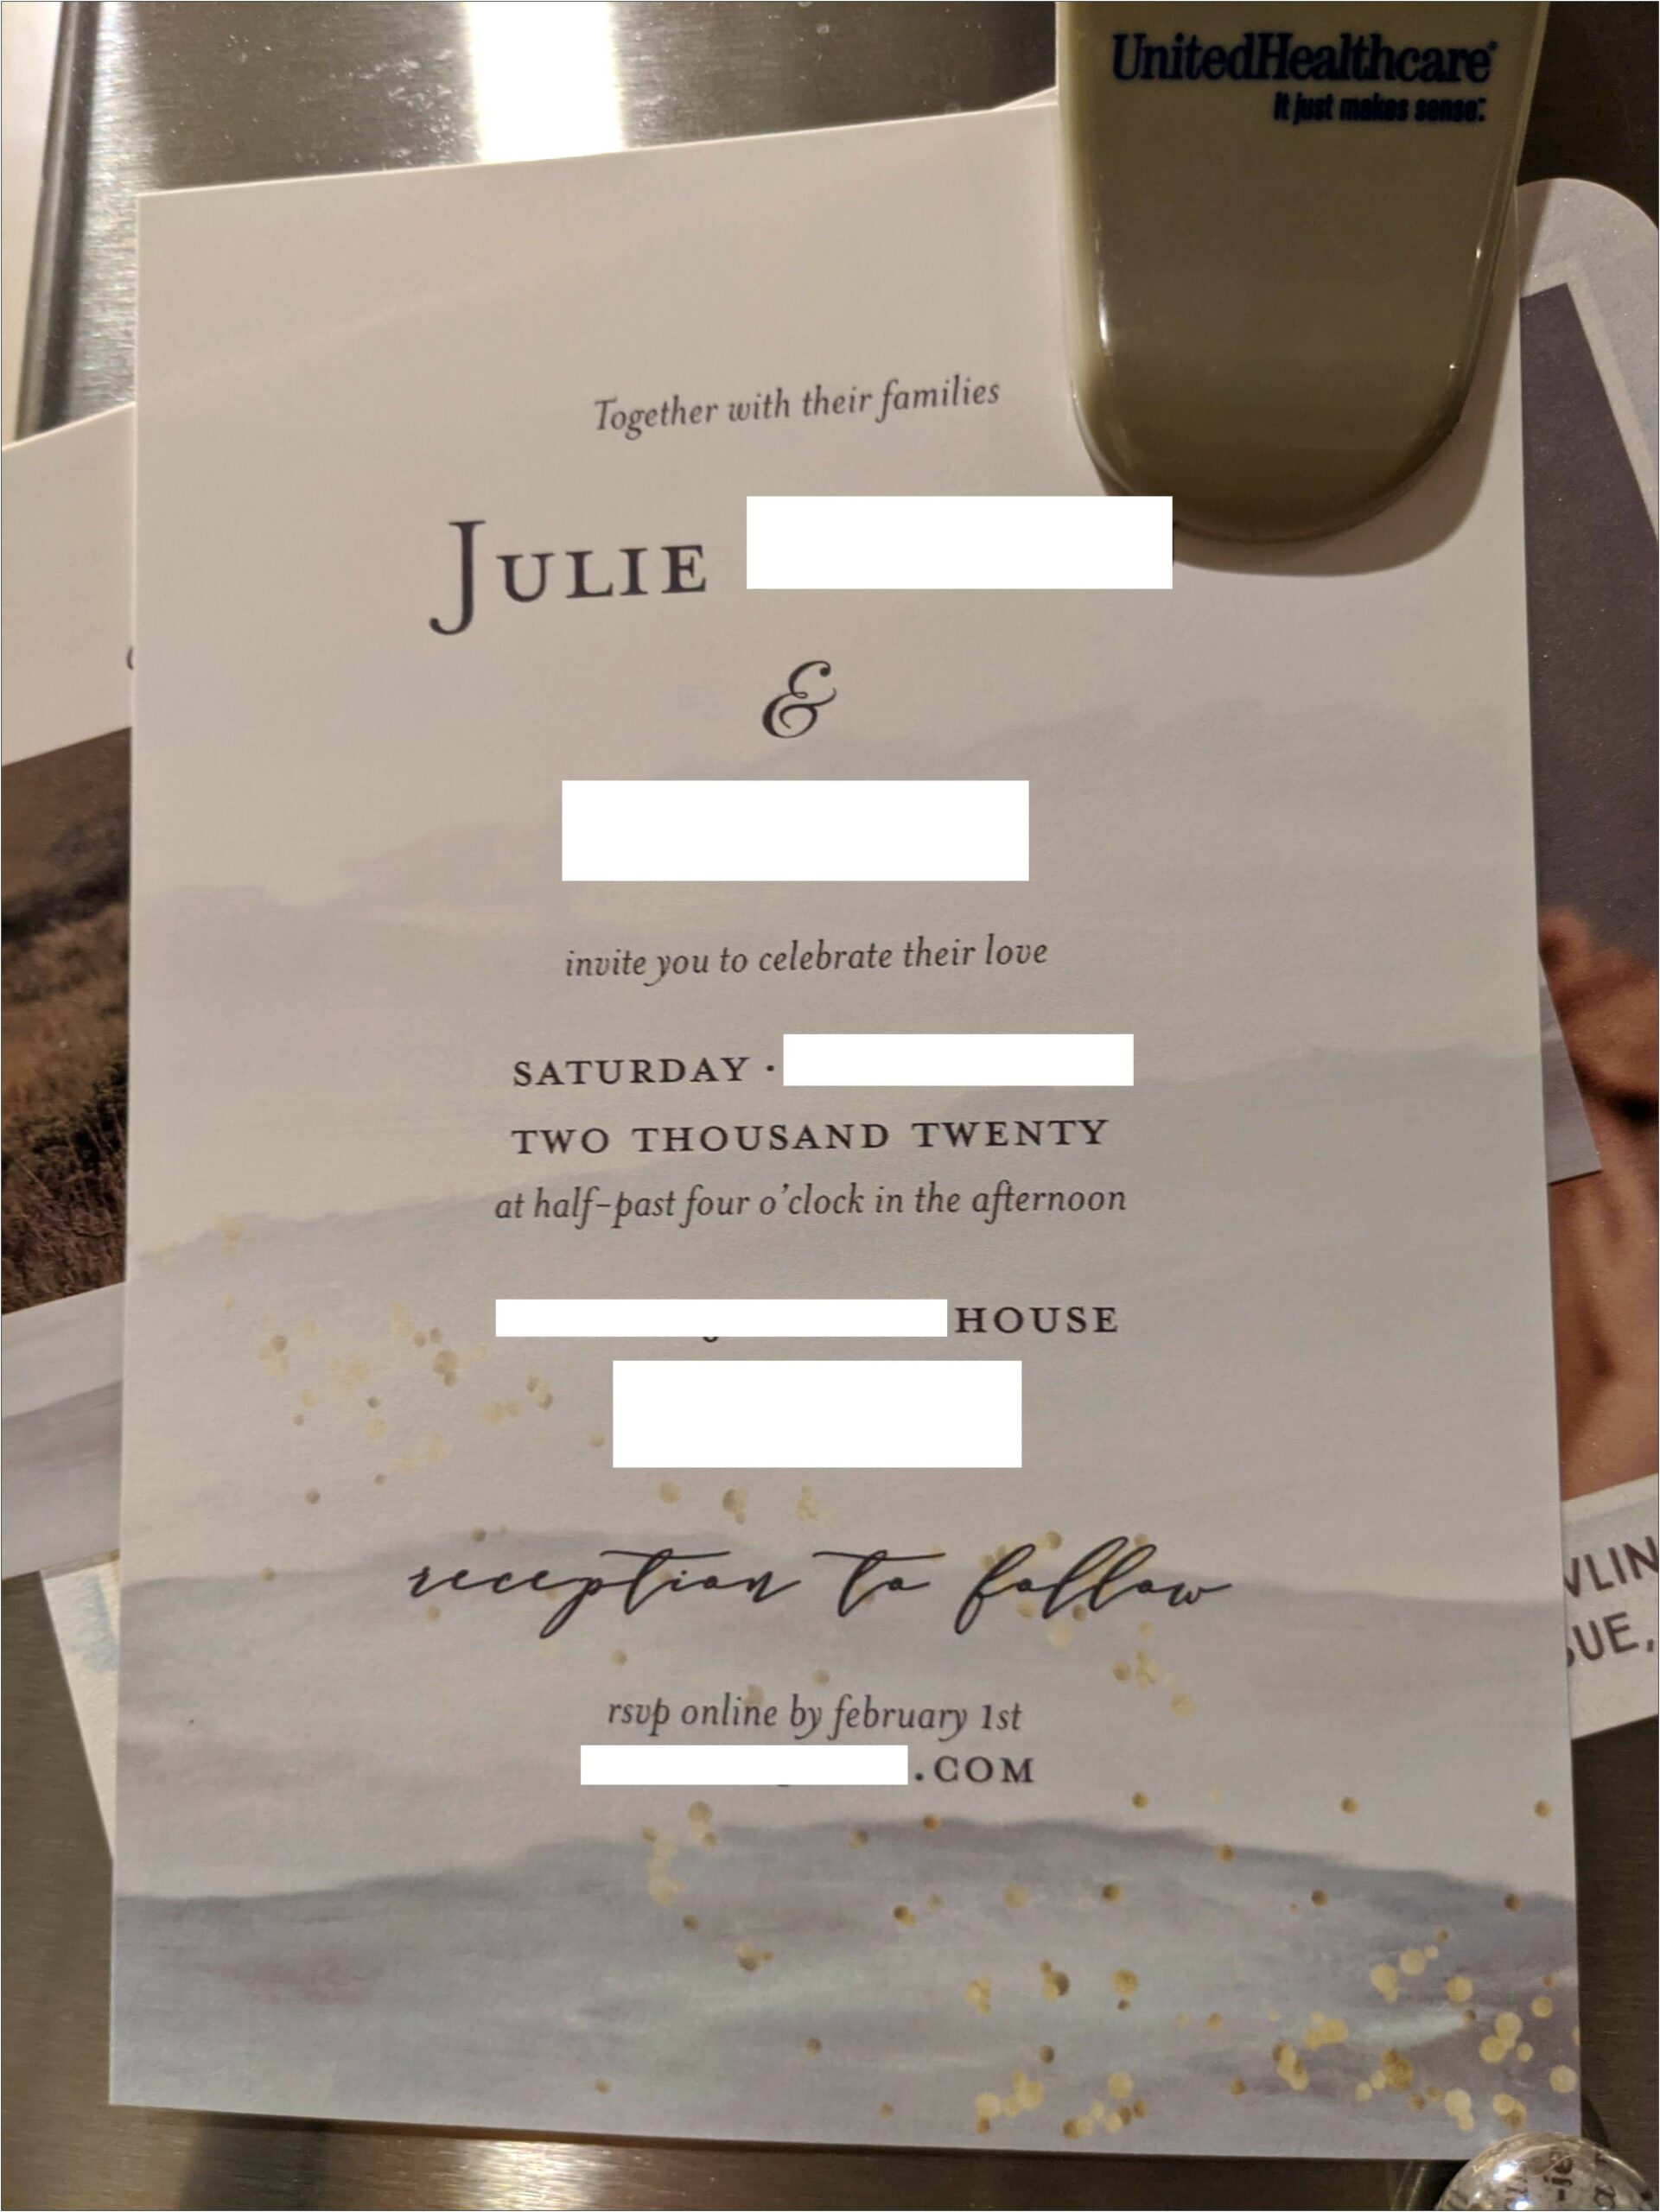 Inviting Celebrities To Your Wedding Reddit